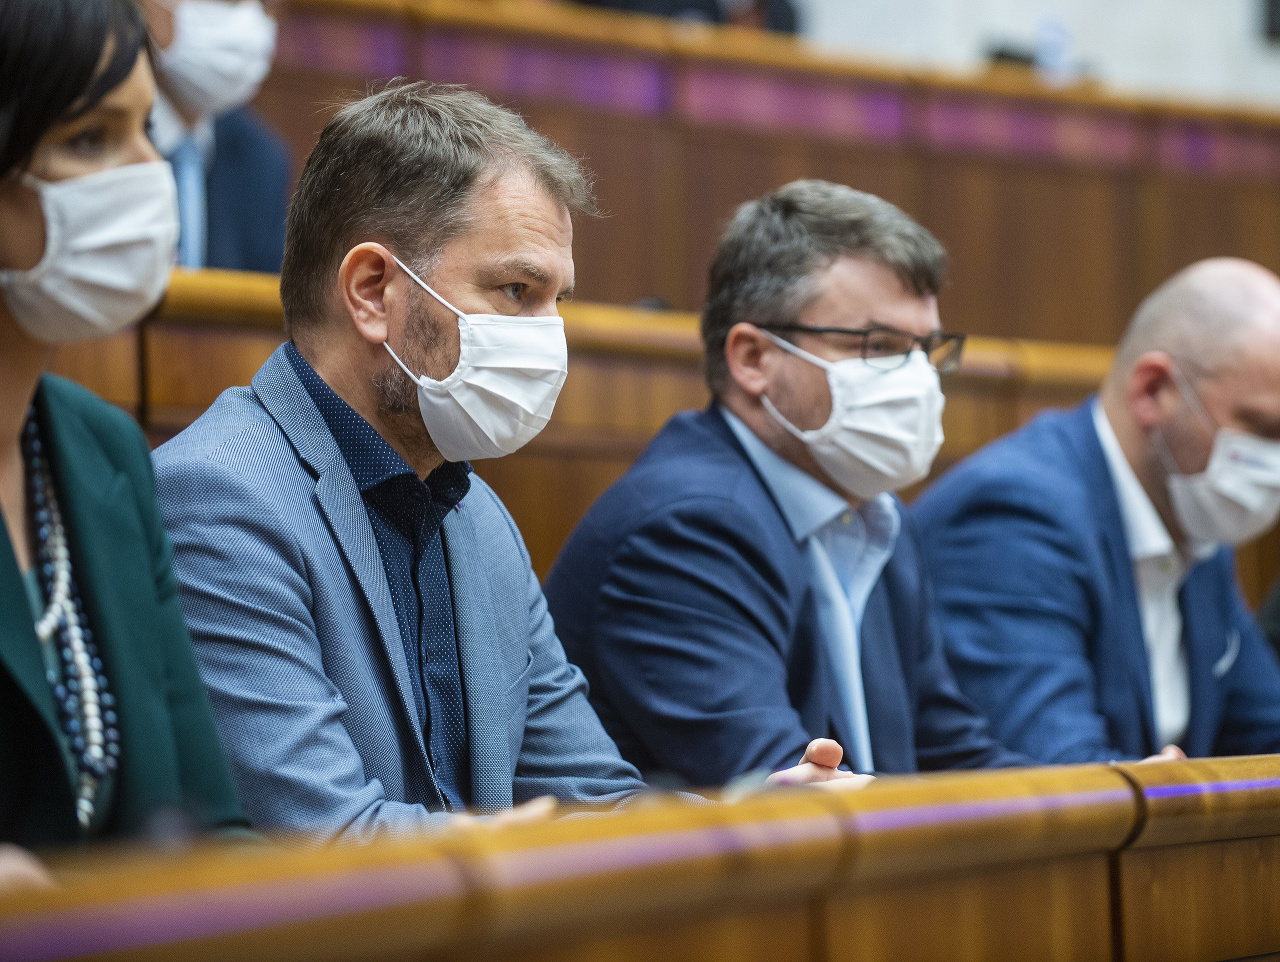 Ministri a premiér Igor Matovič na zasadnutí parlamentu